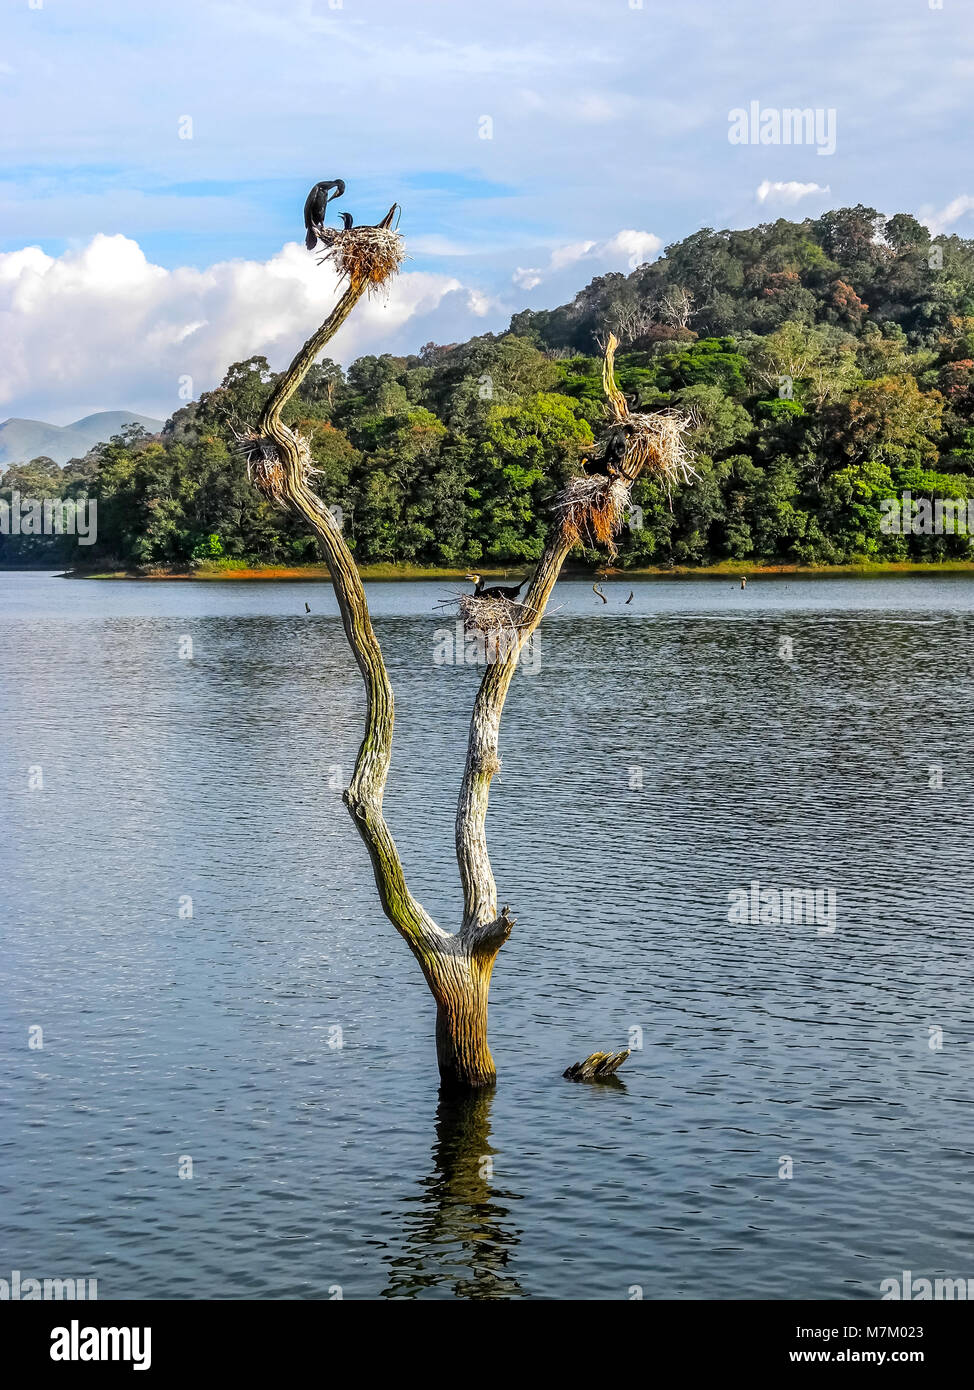 THEKKADY Kerala, India - DEC. 15, 2011: nidi di uccelli su ceppi di alberi nel lago del Periyar in del Periyar Wildlife Sanctuary, Kumily Kerala, India. Foto Stock